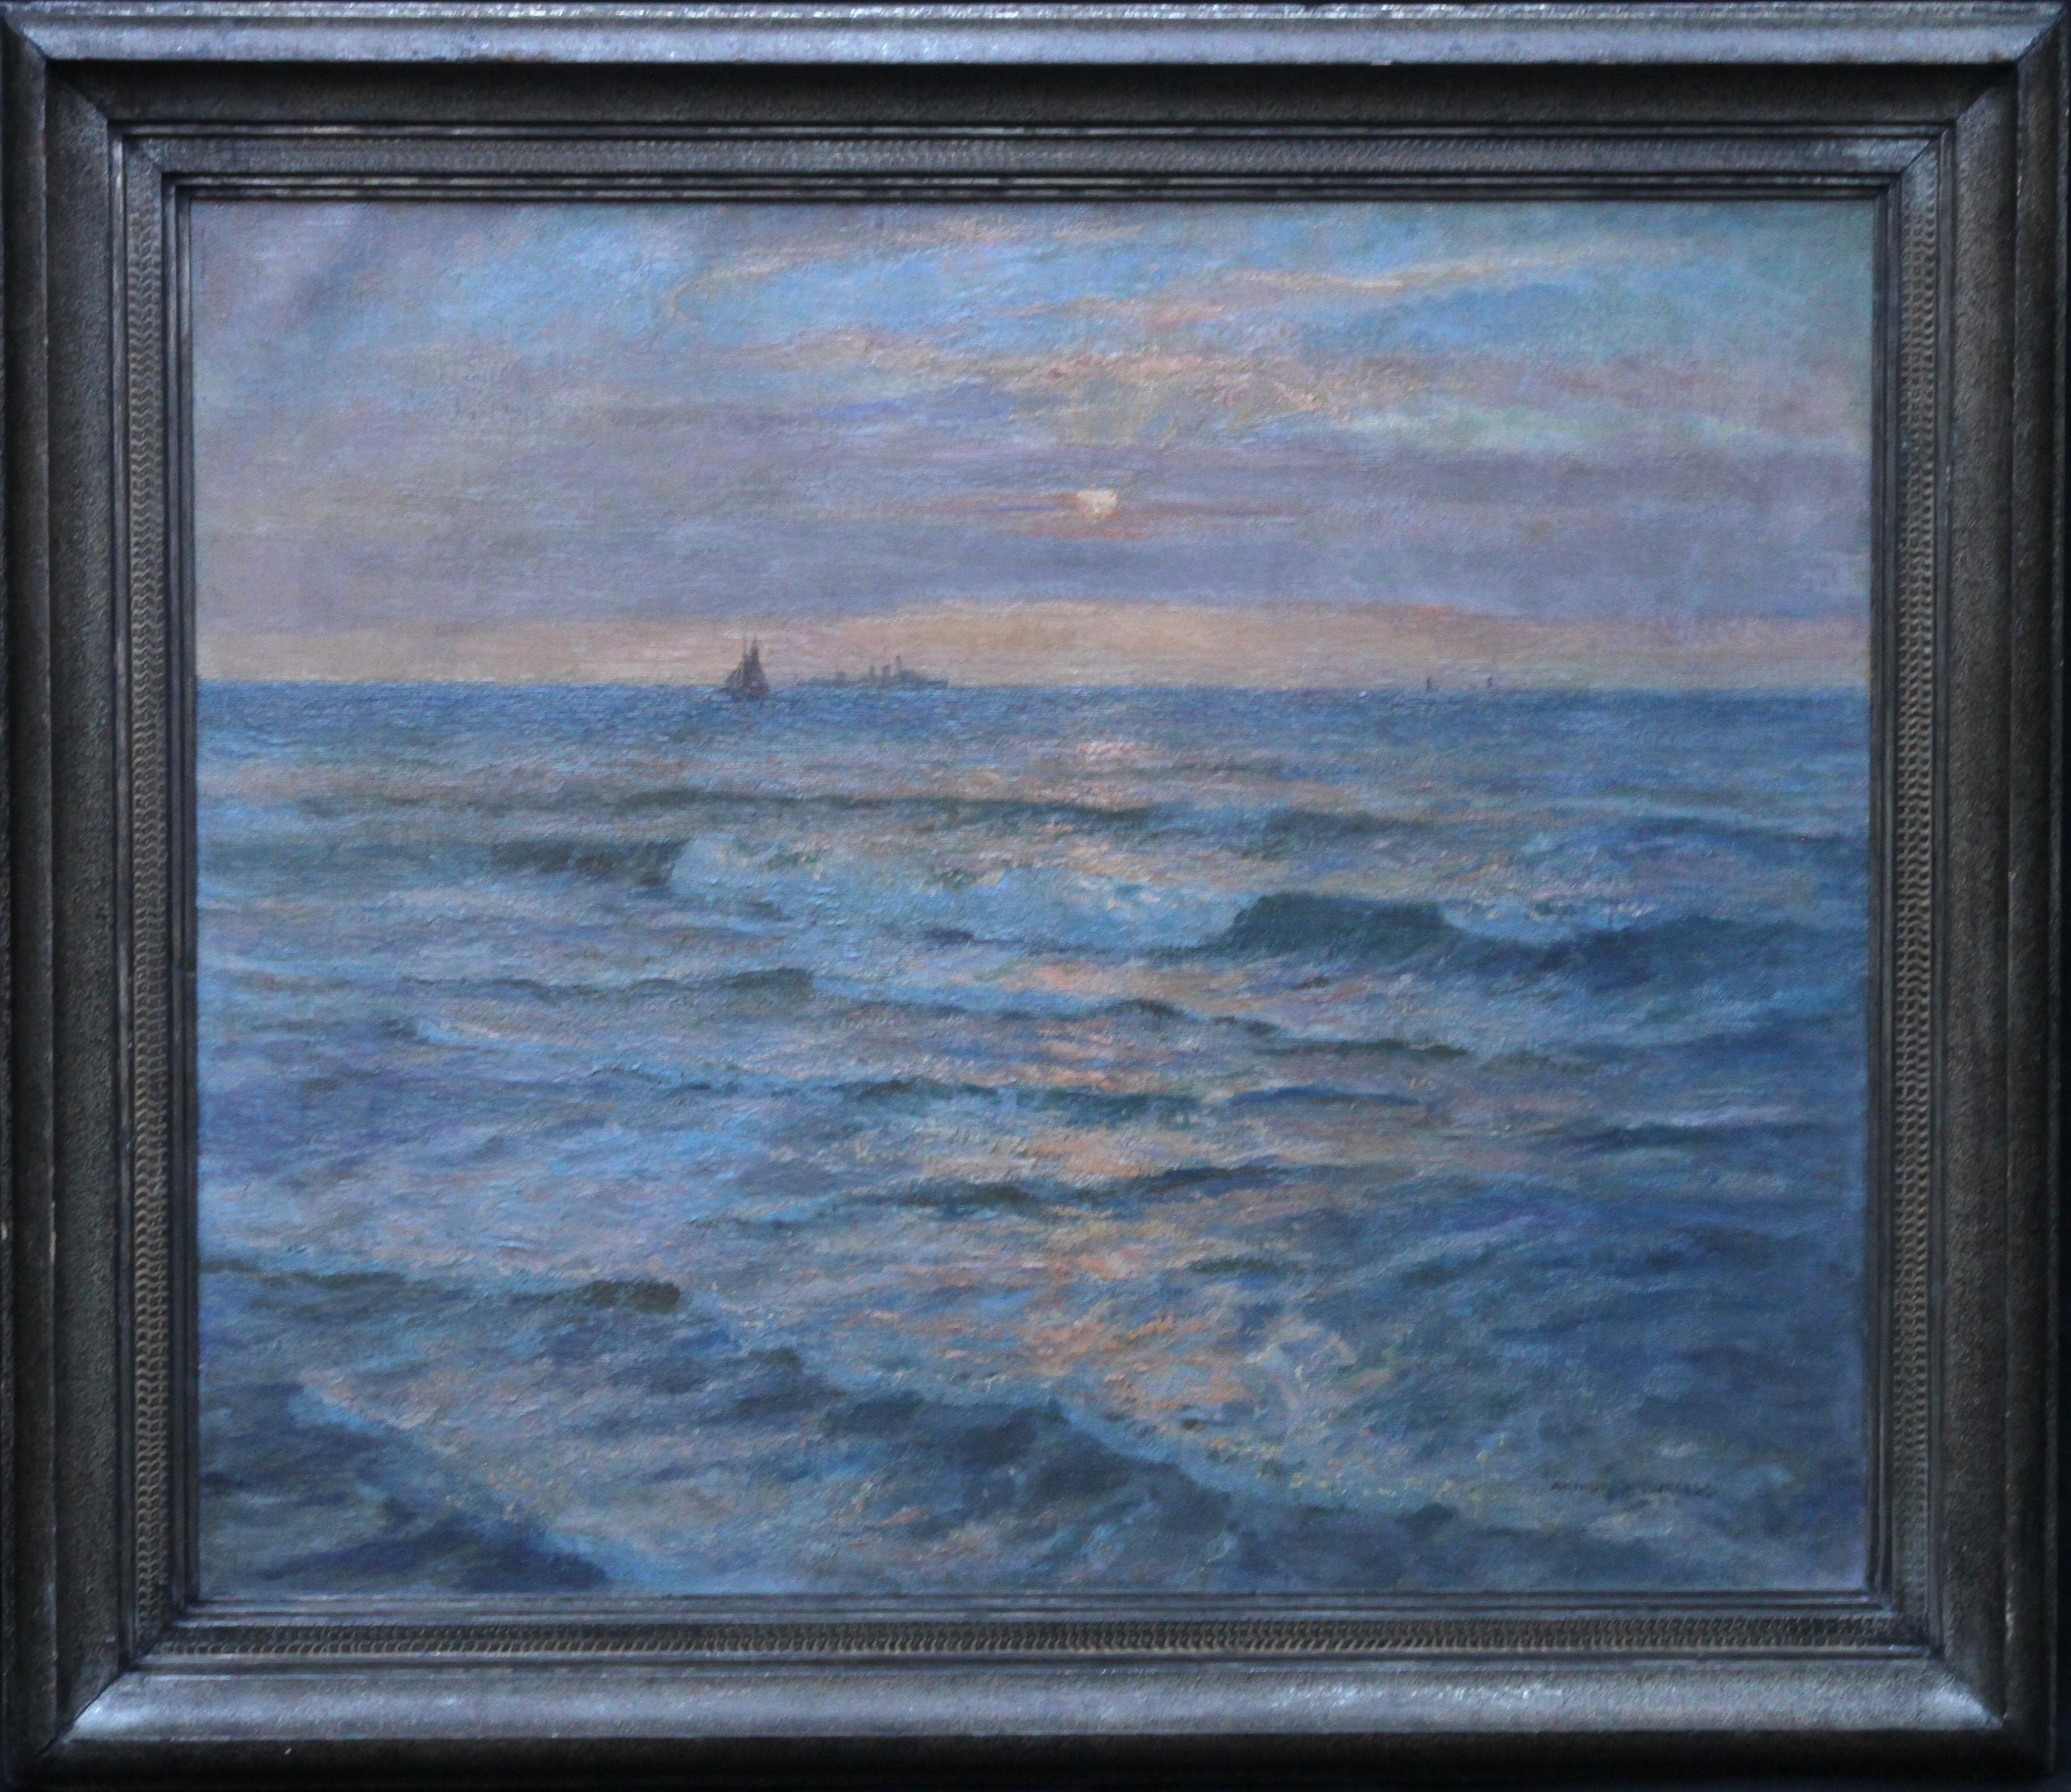 Arthur James Wetherall Burgess Landscape Painting - Sunset Seascape - Australian art Victorian Impressionist marine oil painting